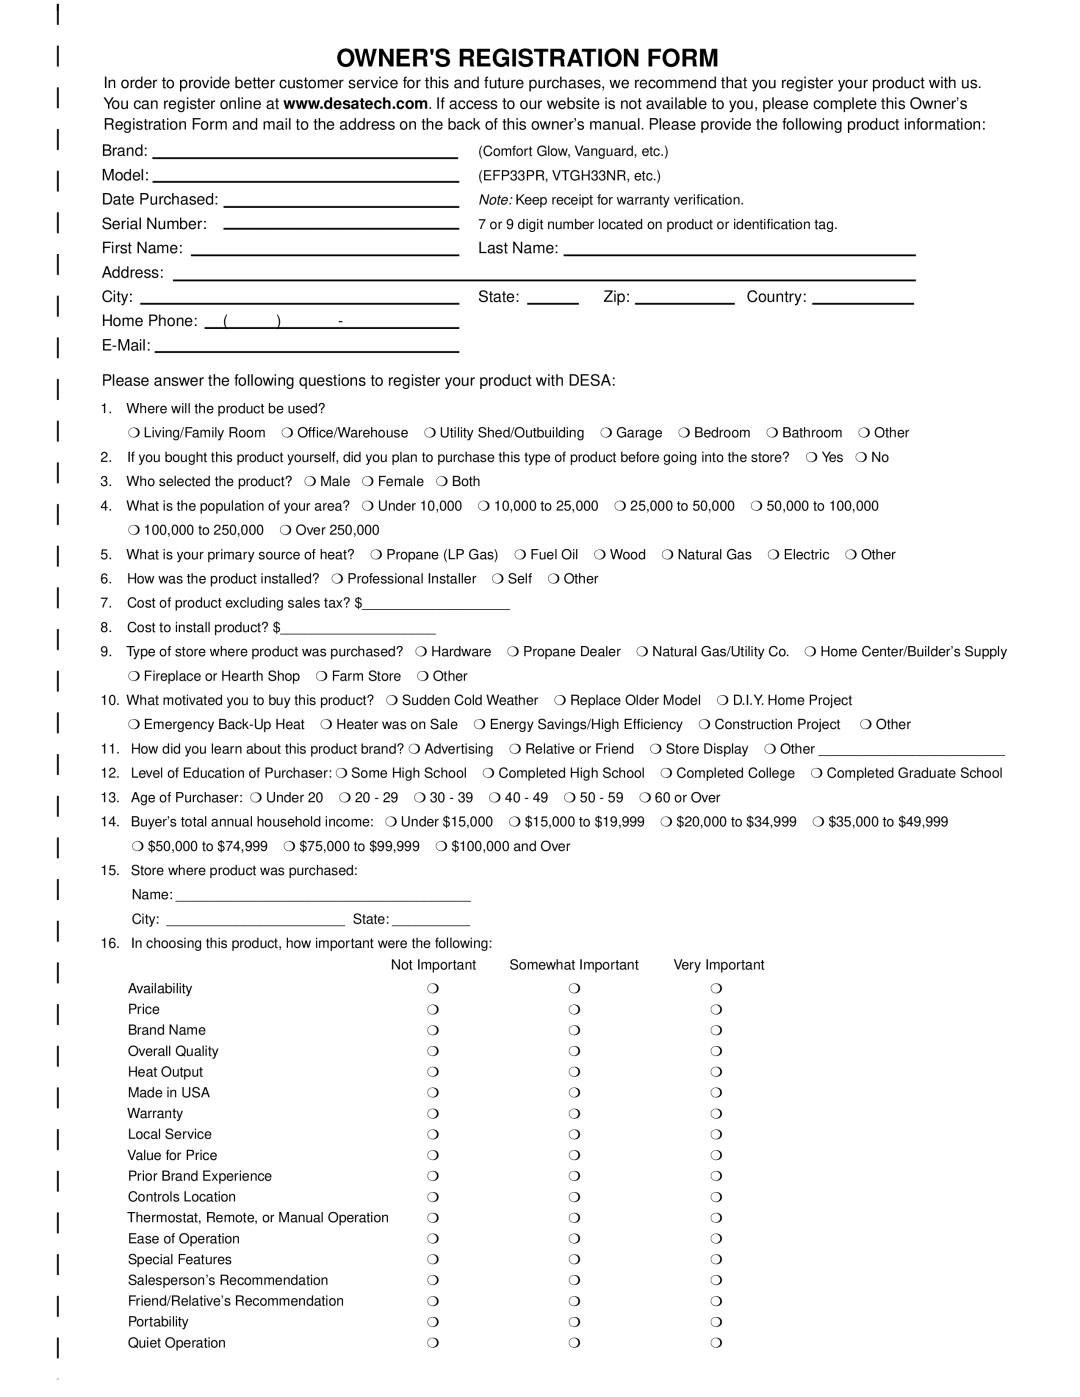 Desa SDVBNC, SDVBPC installation manual Owners Registration Form 